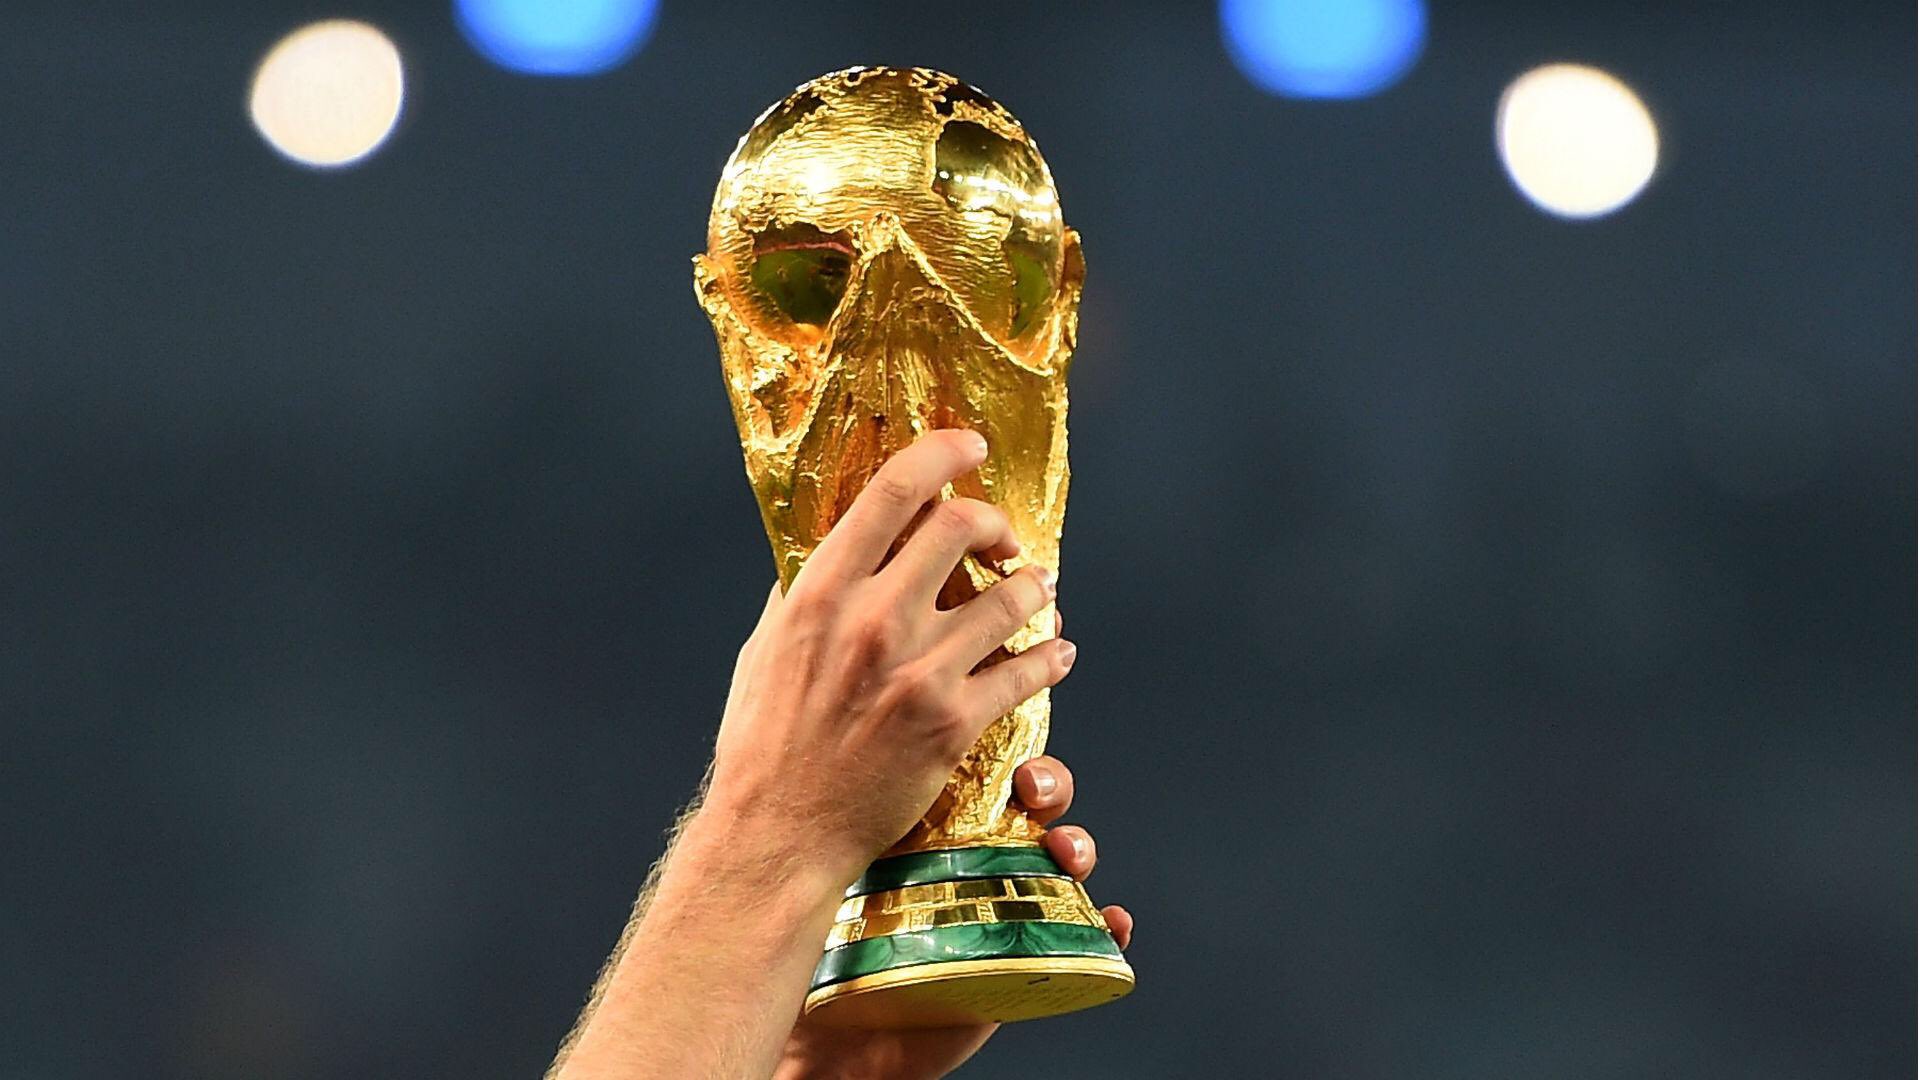 Qatar Fifa world cup 2022